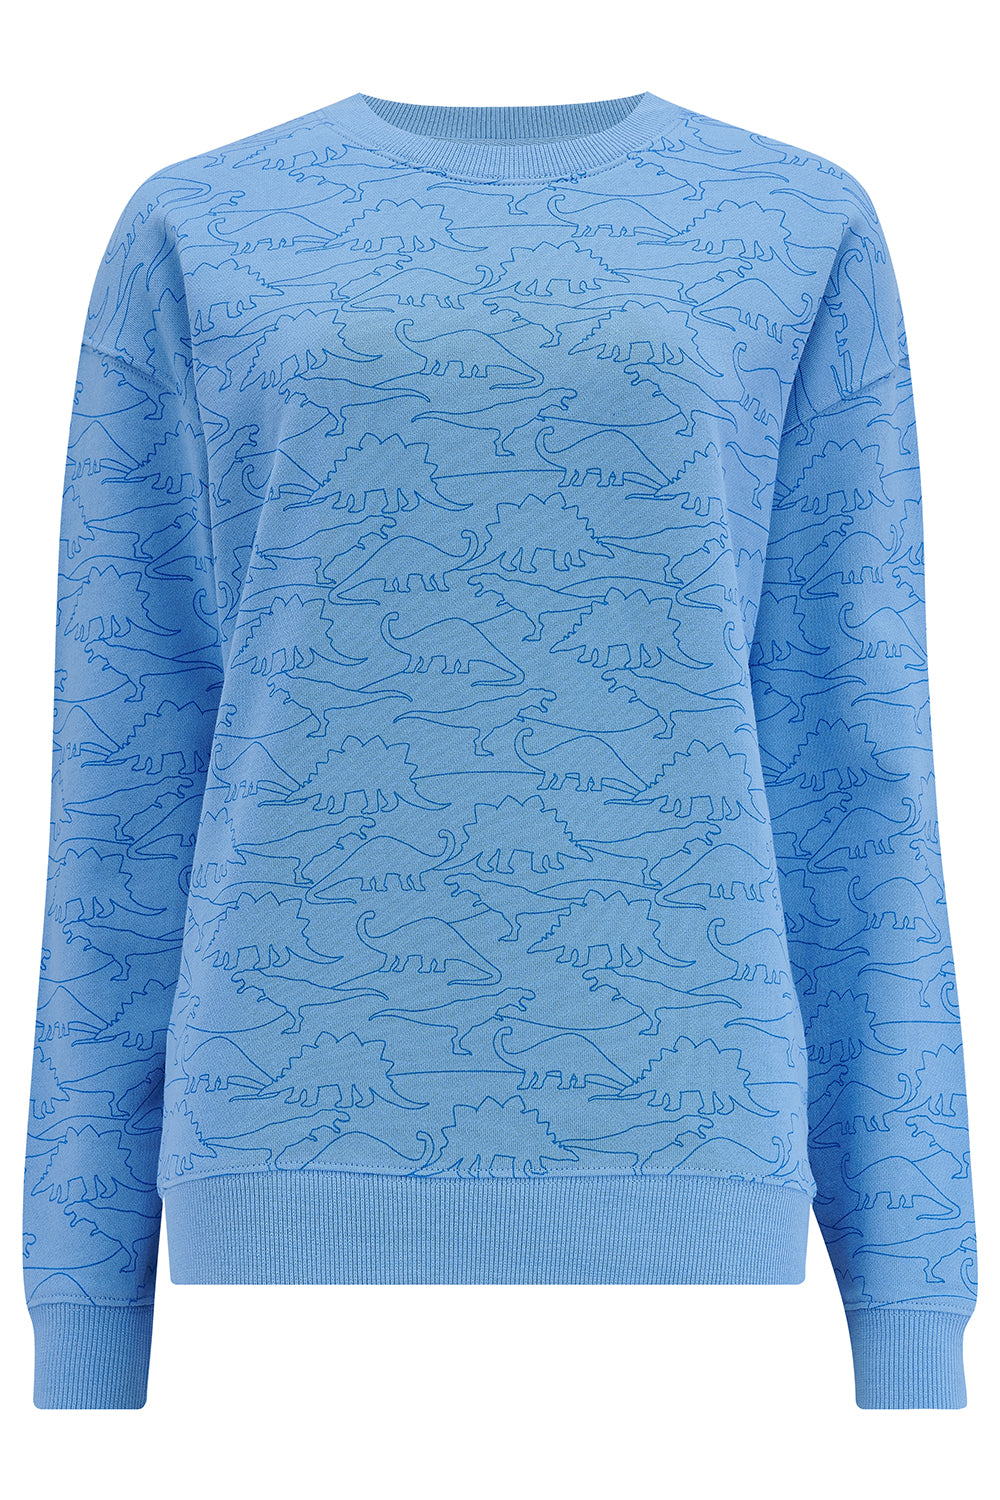 Sugarhill Brighton - Noah Blue Dinosaur Sweatshirt